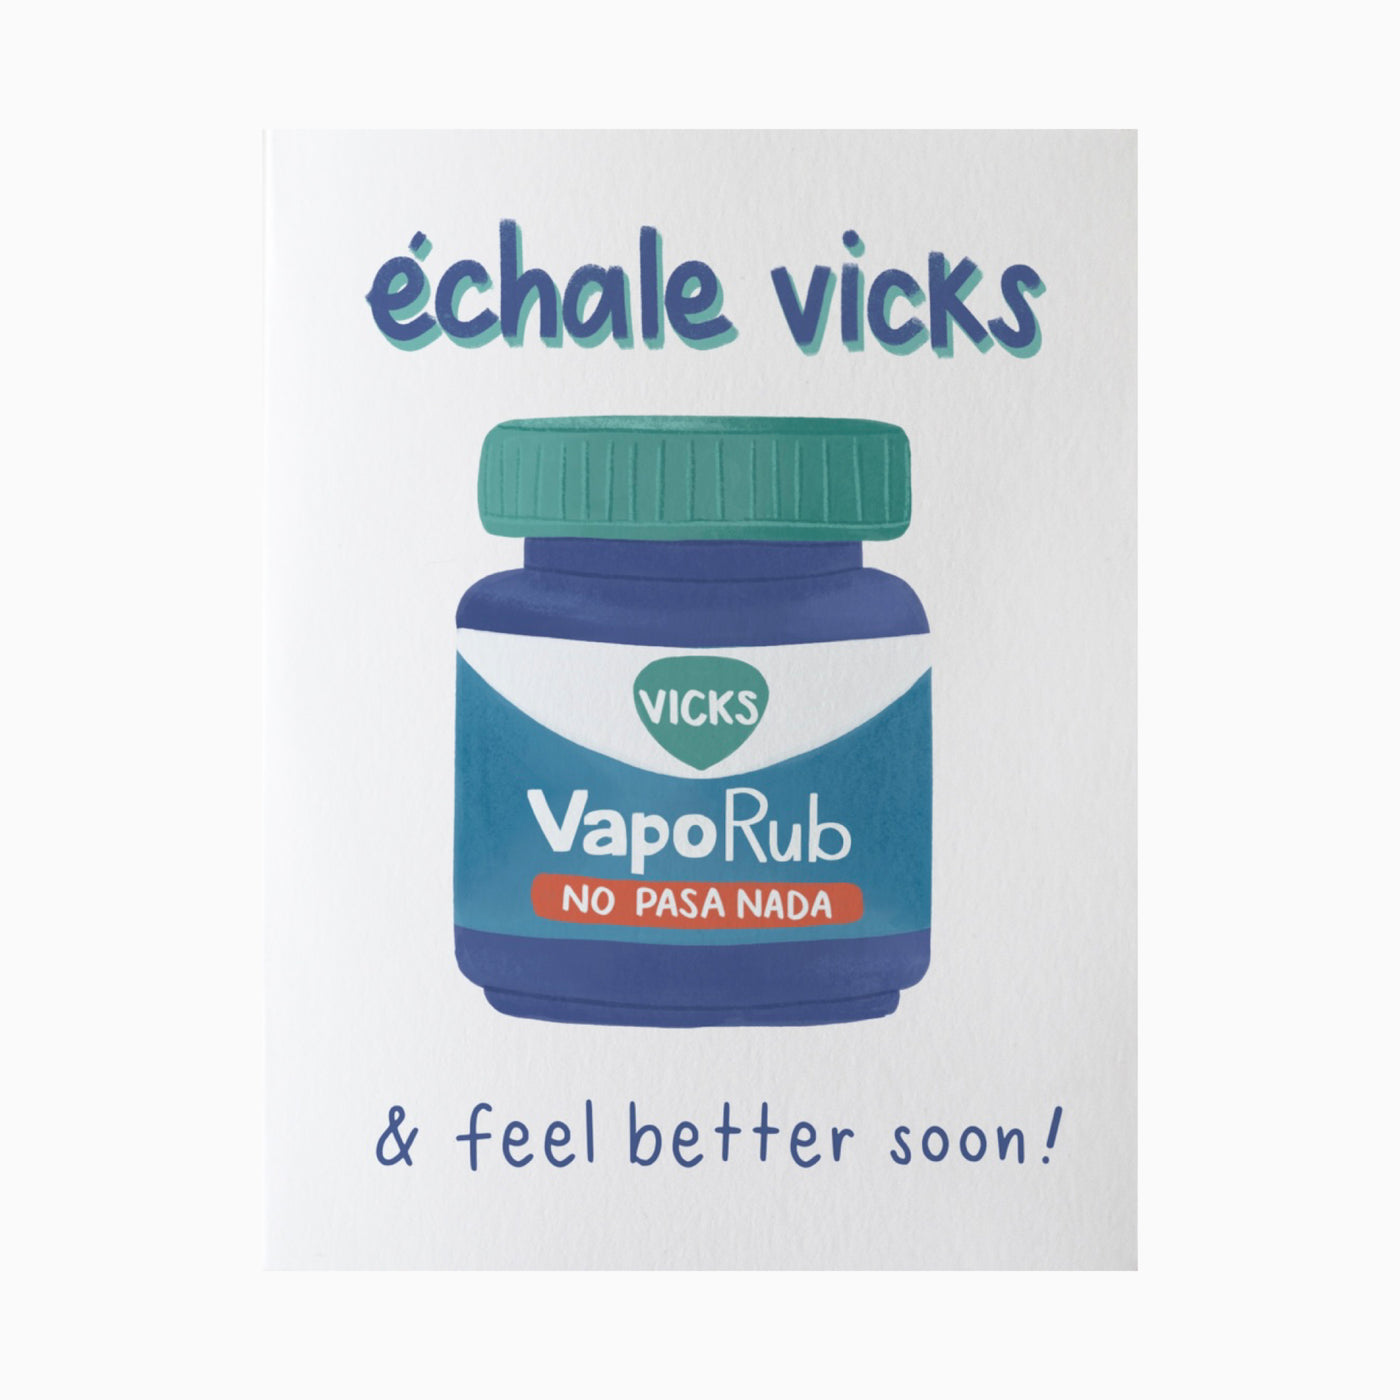 Echale Vicks & Feel Better Soon greeting card. Design features Vicks VapoRub jar.